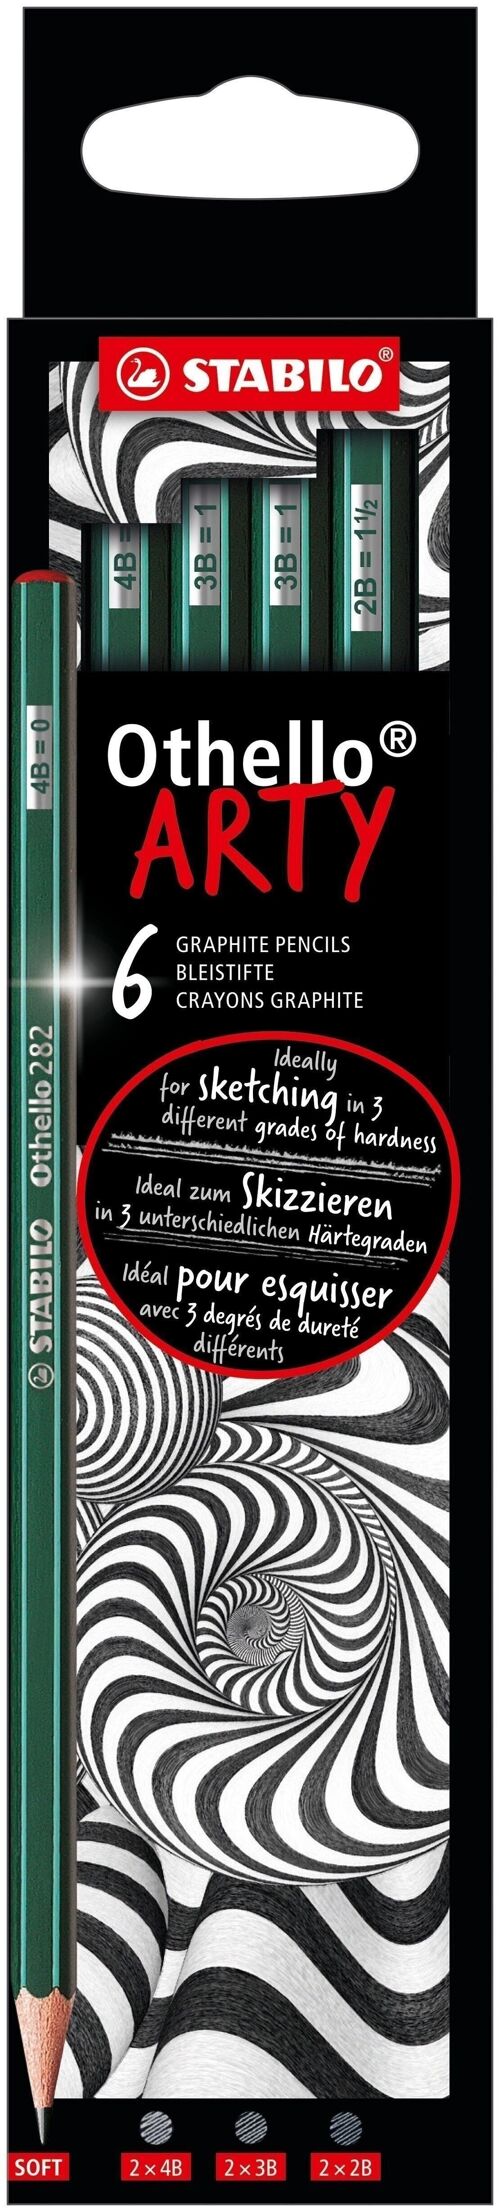 Crayons graphite - Etui carton x 6 STABILO Othello ARTY mines tendres (2x 4B, 2x 3B, 2x 2B)